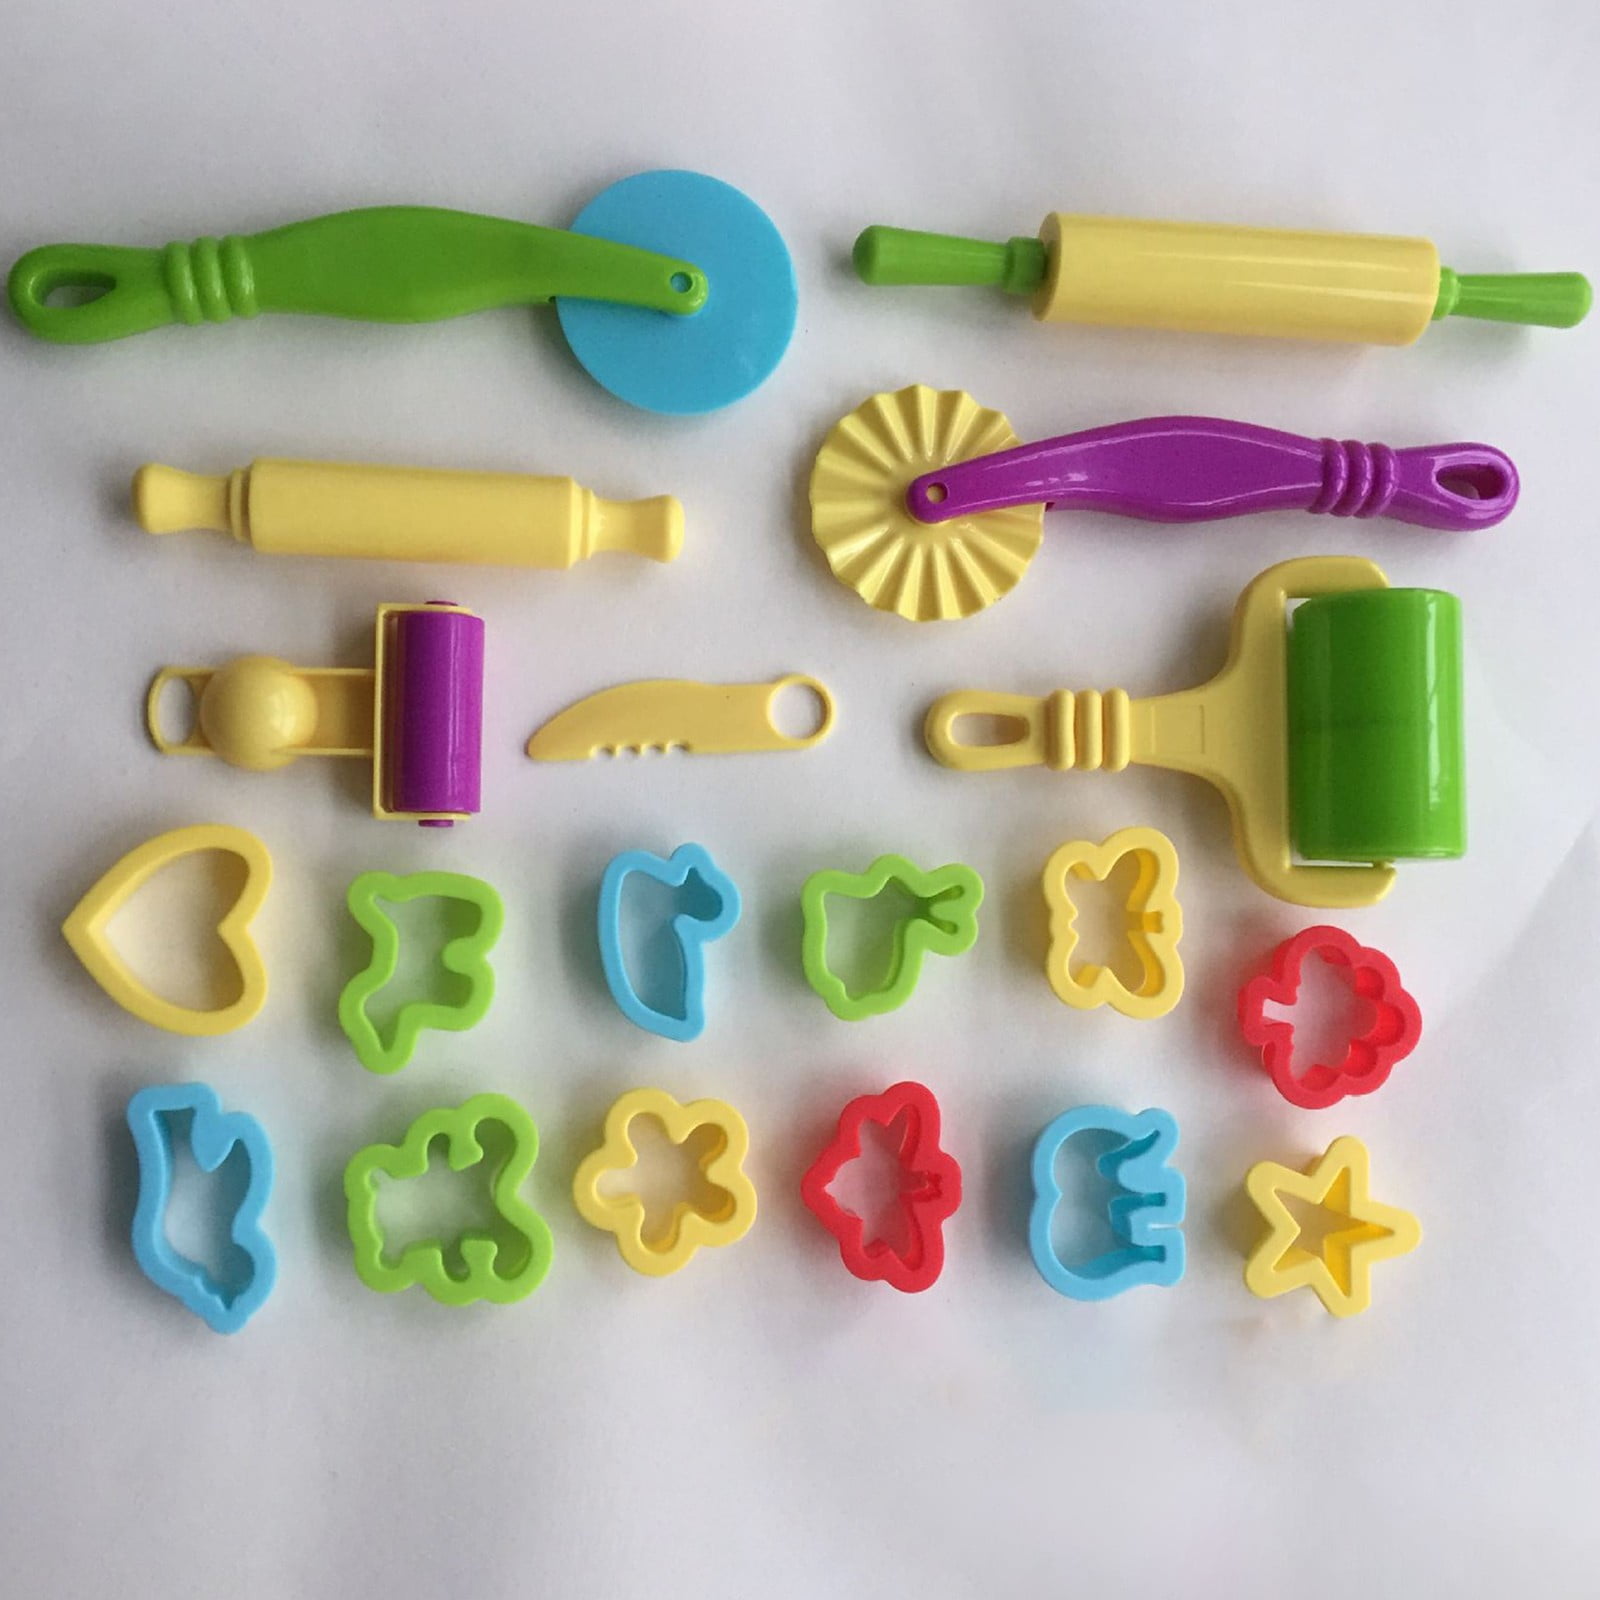 Dcenta 26 Pieces Play Dough Tools Playdough Accessories Set